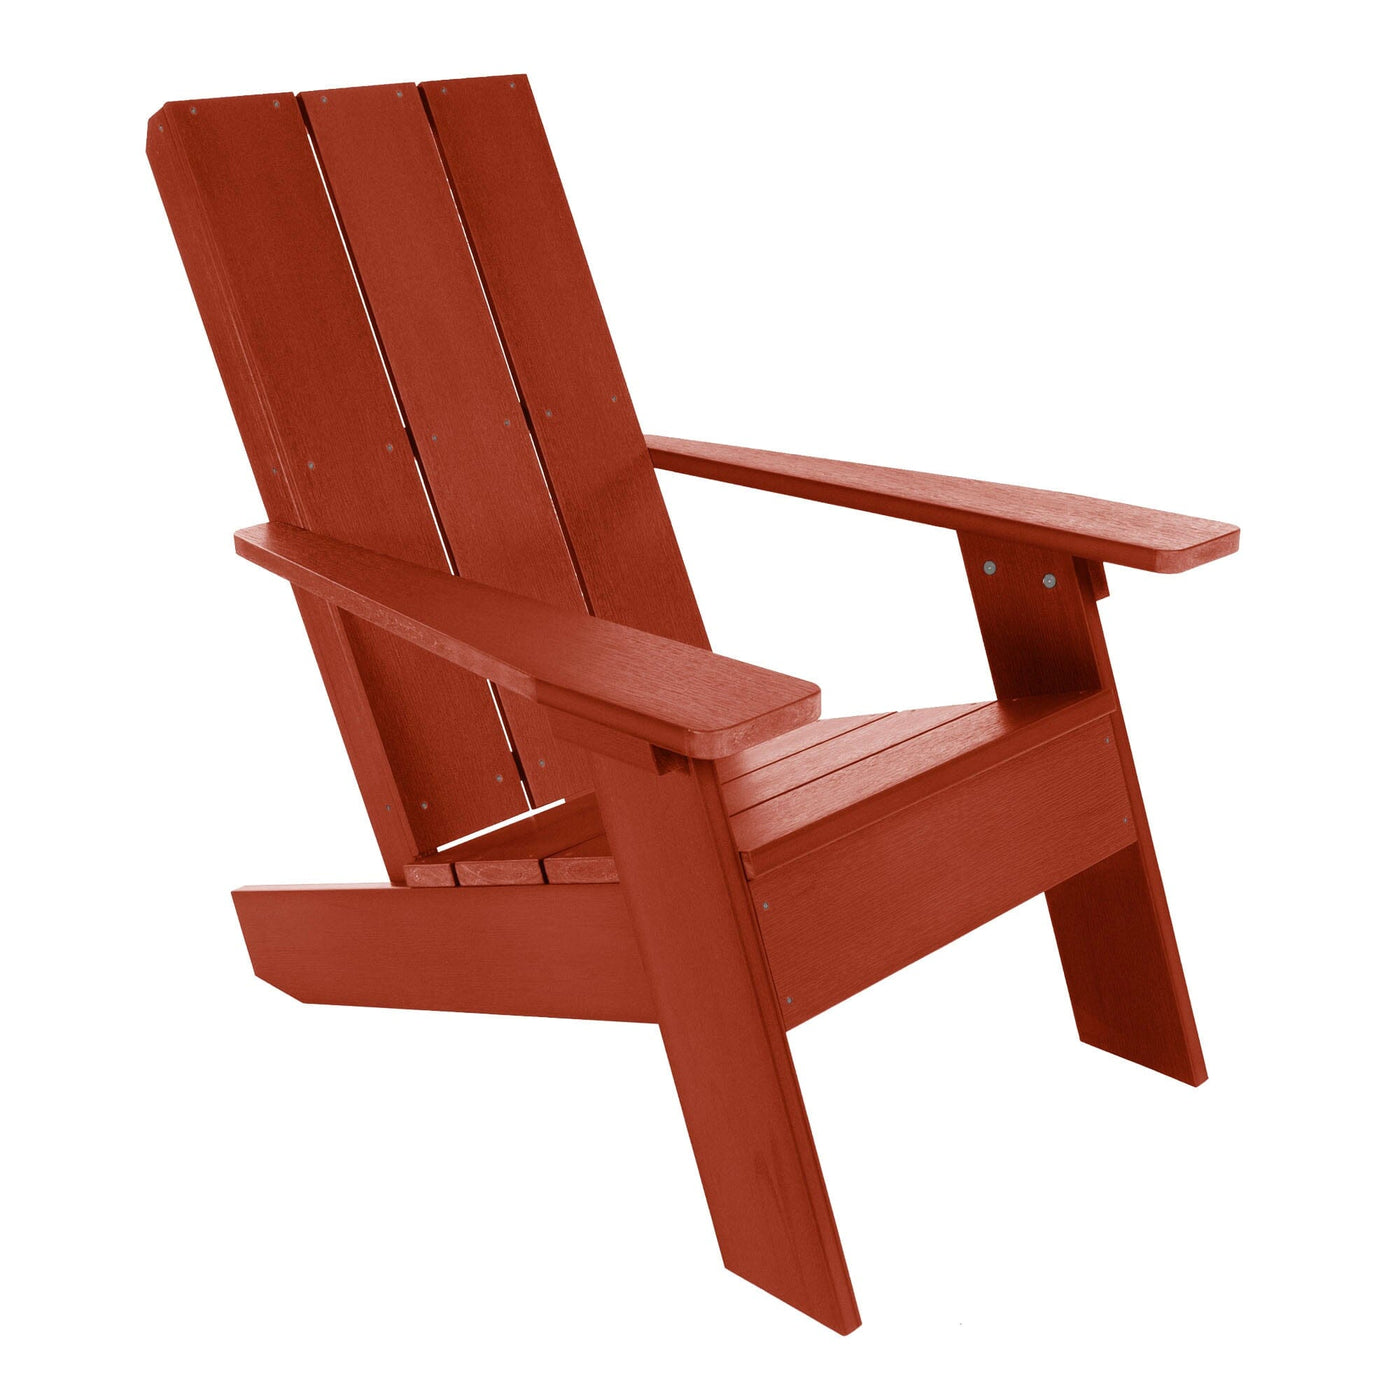 Italica Modern Adirondack Chair in Rustic Red